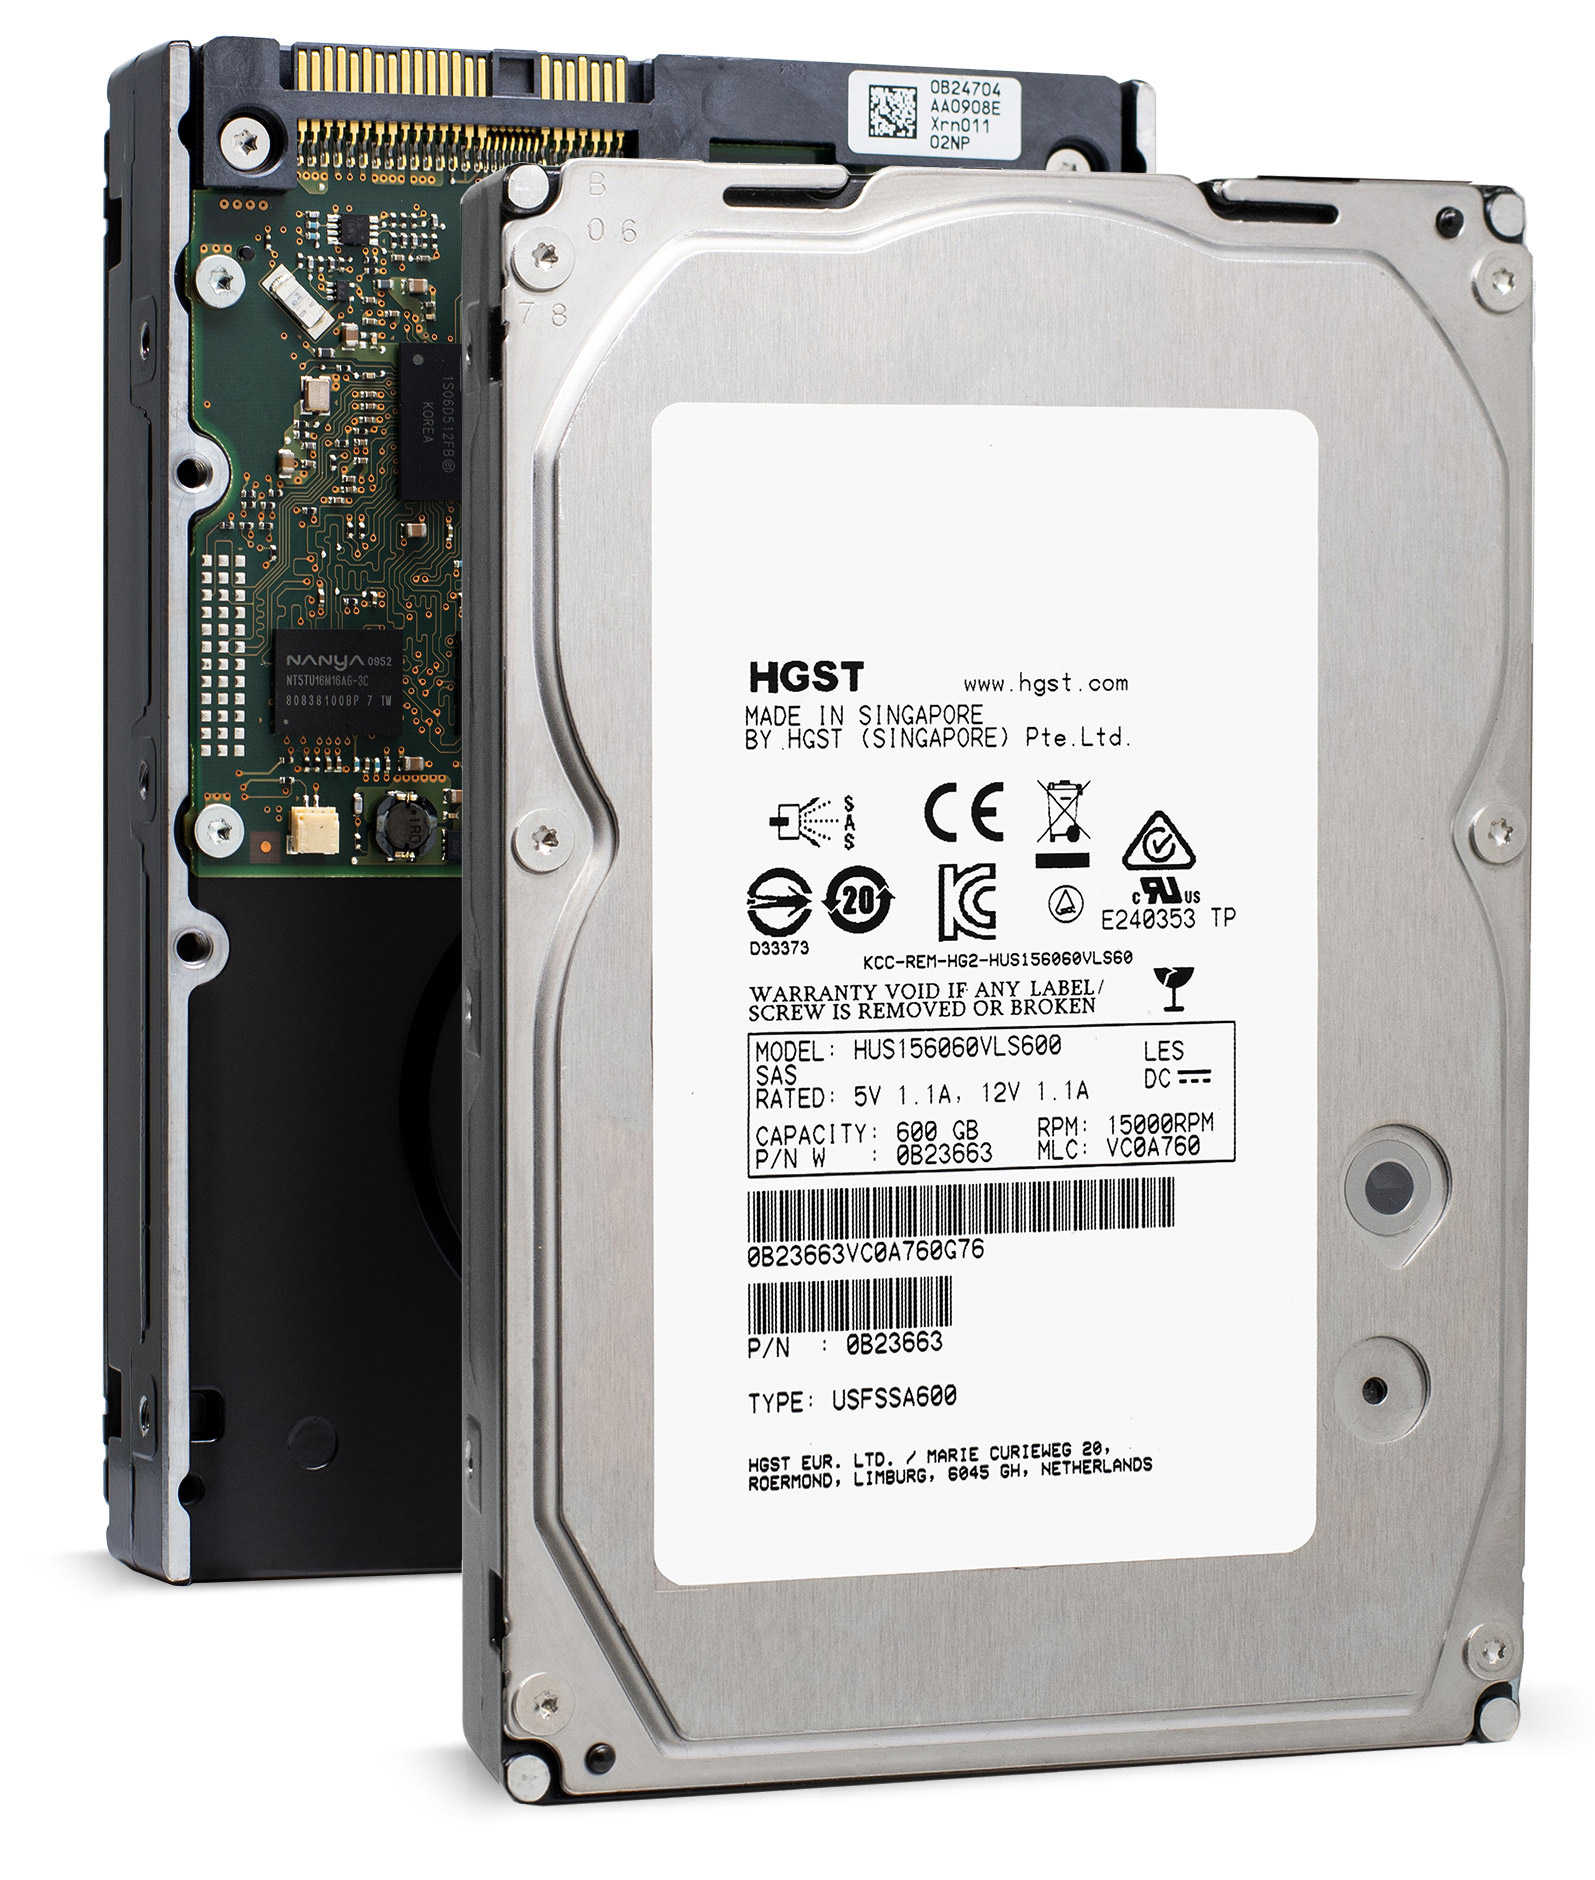 HGST Ultrastar 15K600 HUS156060VLS600 0B23663 600GB 15K RPM SAS 6Gb/s 64MB 3.5" Manufacturer Recertified HDD